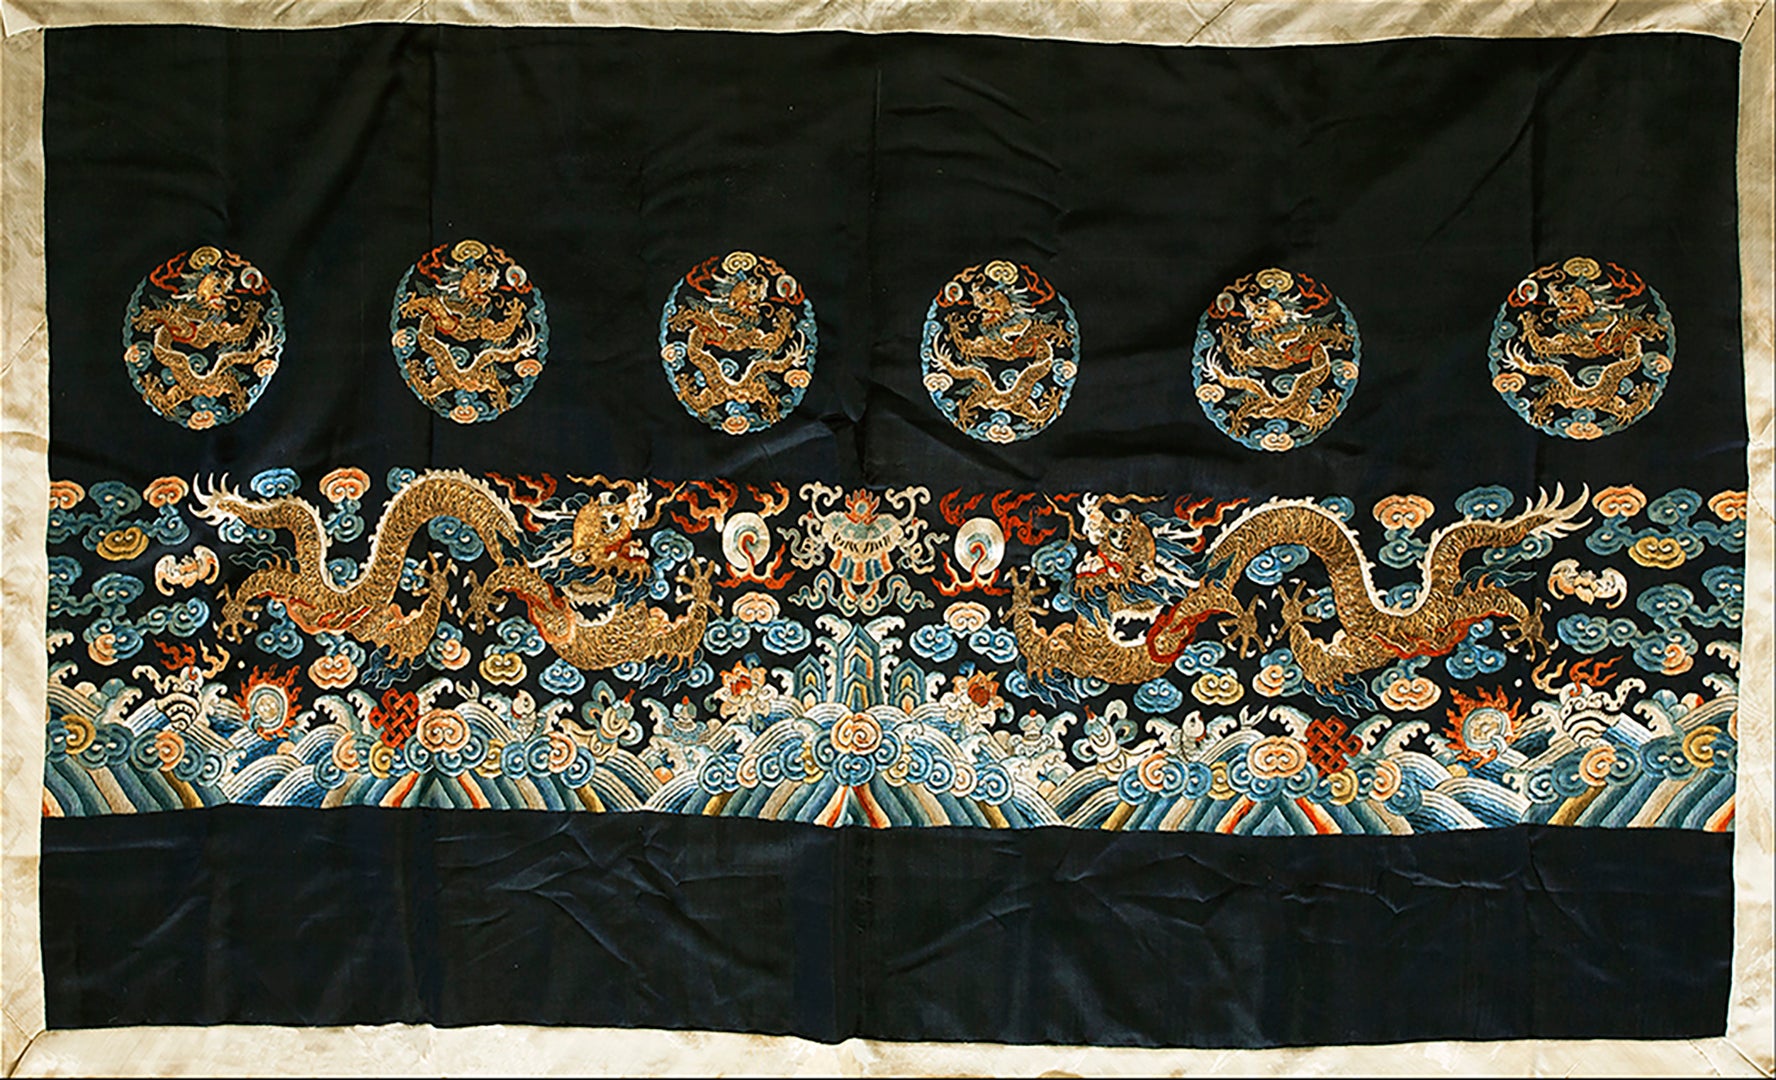 19th Century Chinese Silk & Metallic Thread Embroidery (2'6" x 4'4" - 76 x 132)